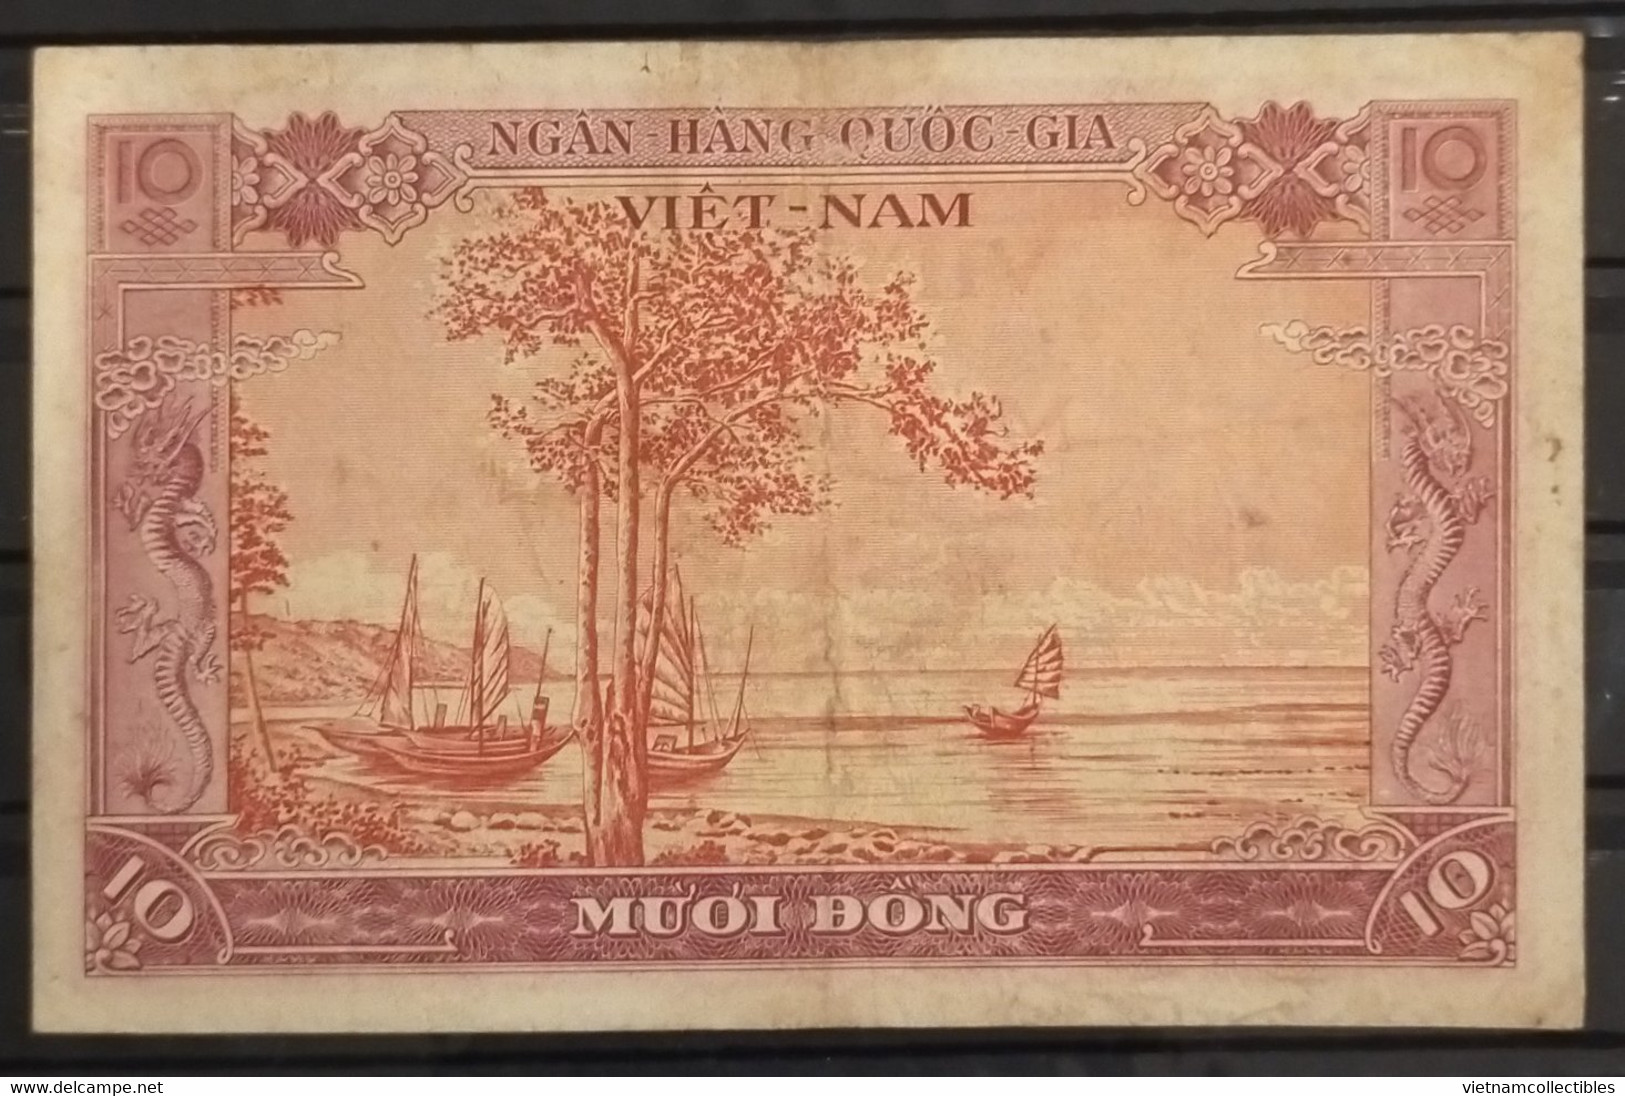 South Viet Nam Vietnam 10 Dông VF Banknote Note 1955 - Pick # 03 / 02 Photo - Vietnam